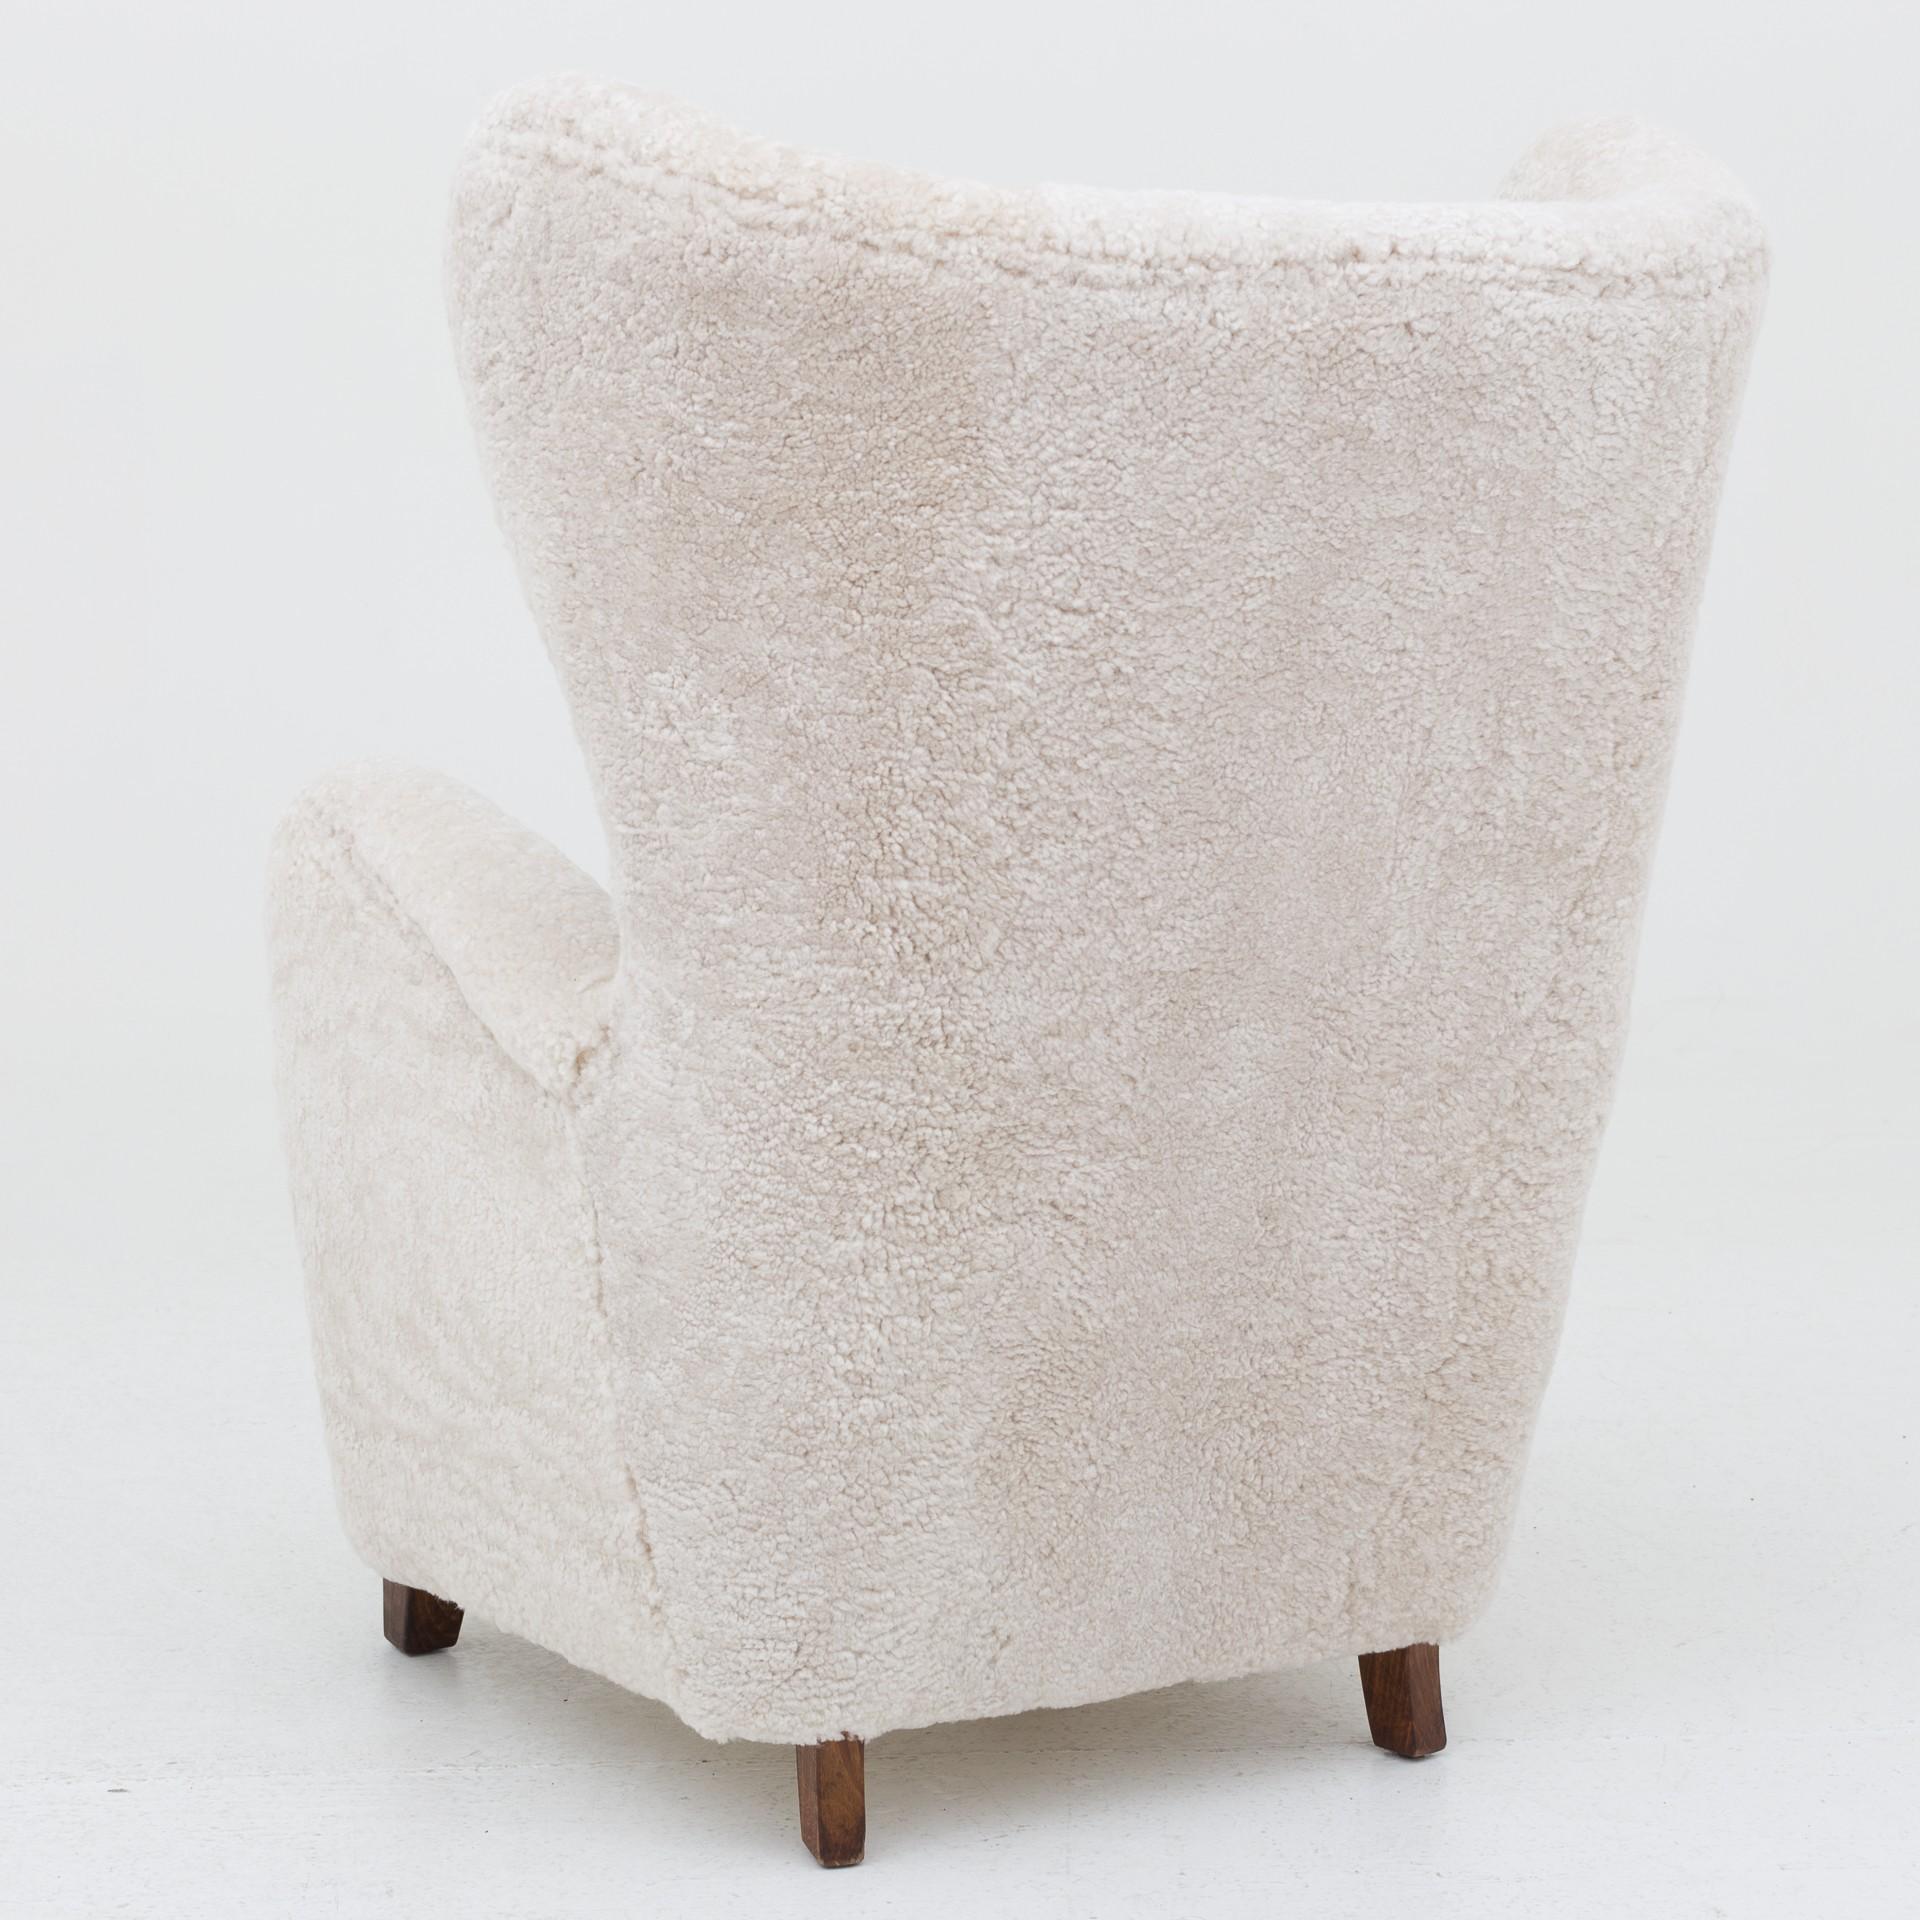 Reupholstered easy chair in lambs wool (Moonlight 09).